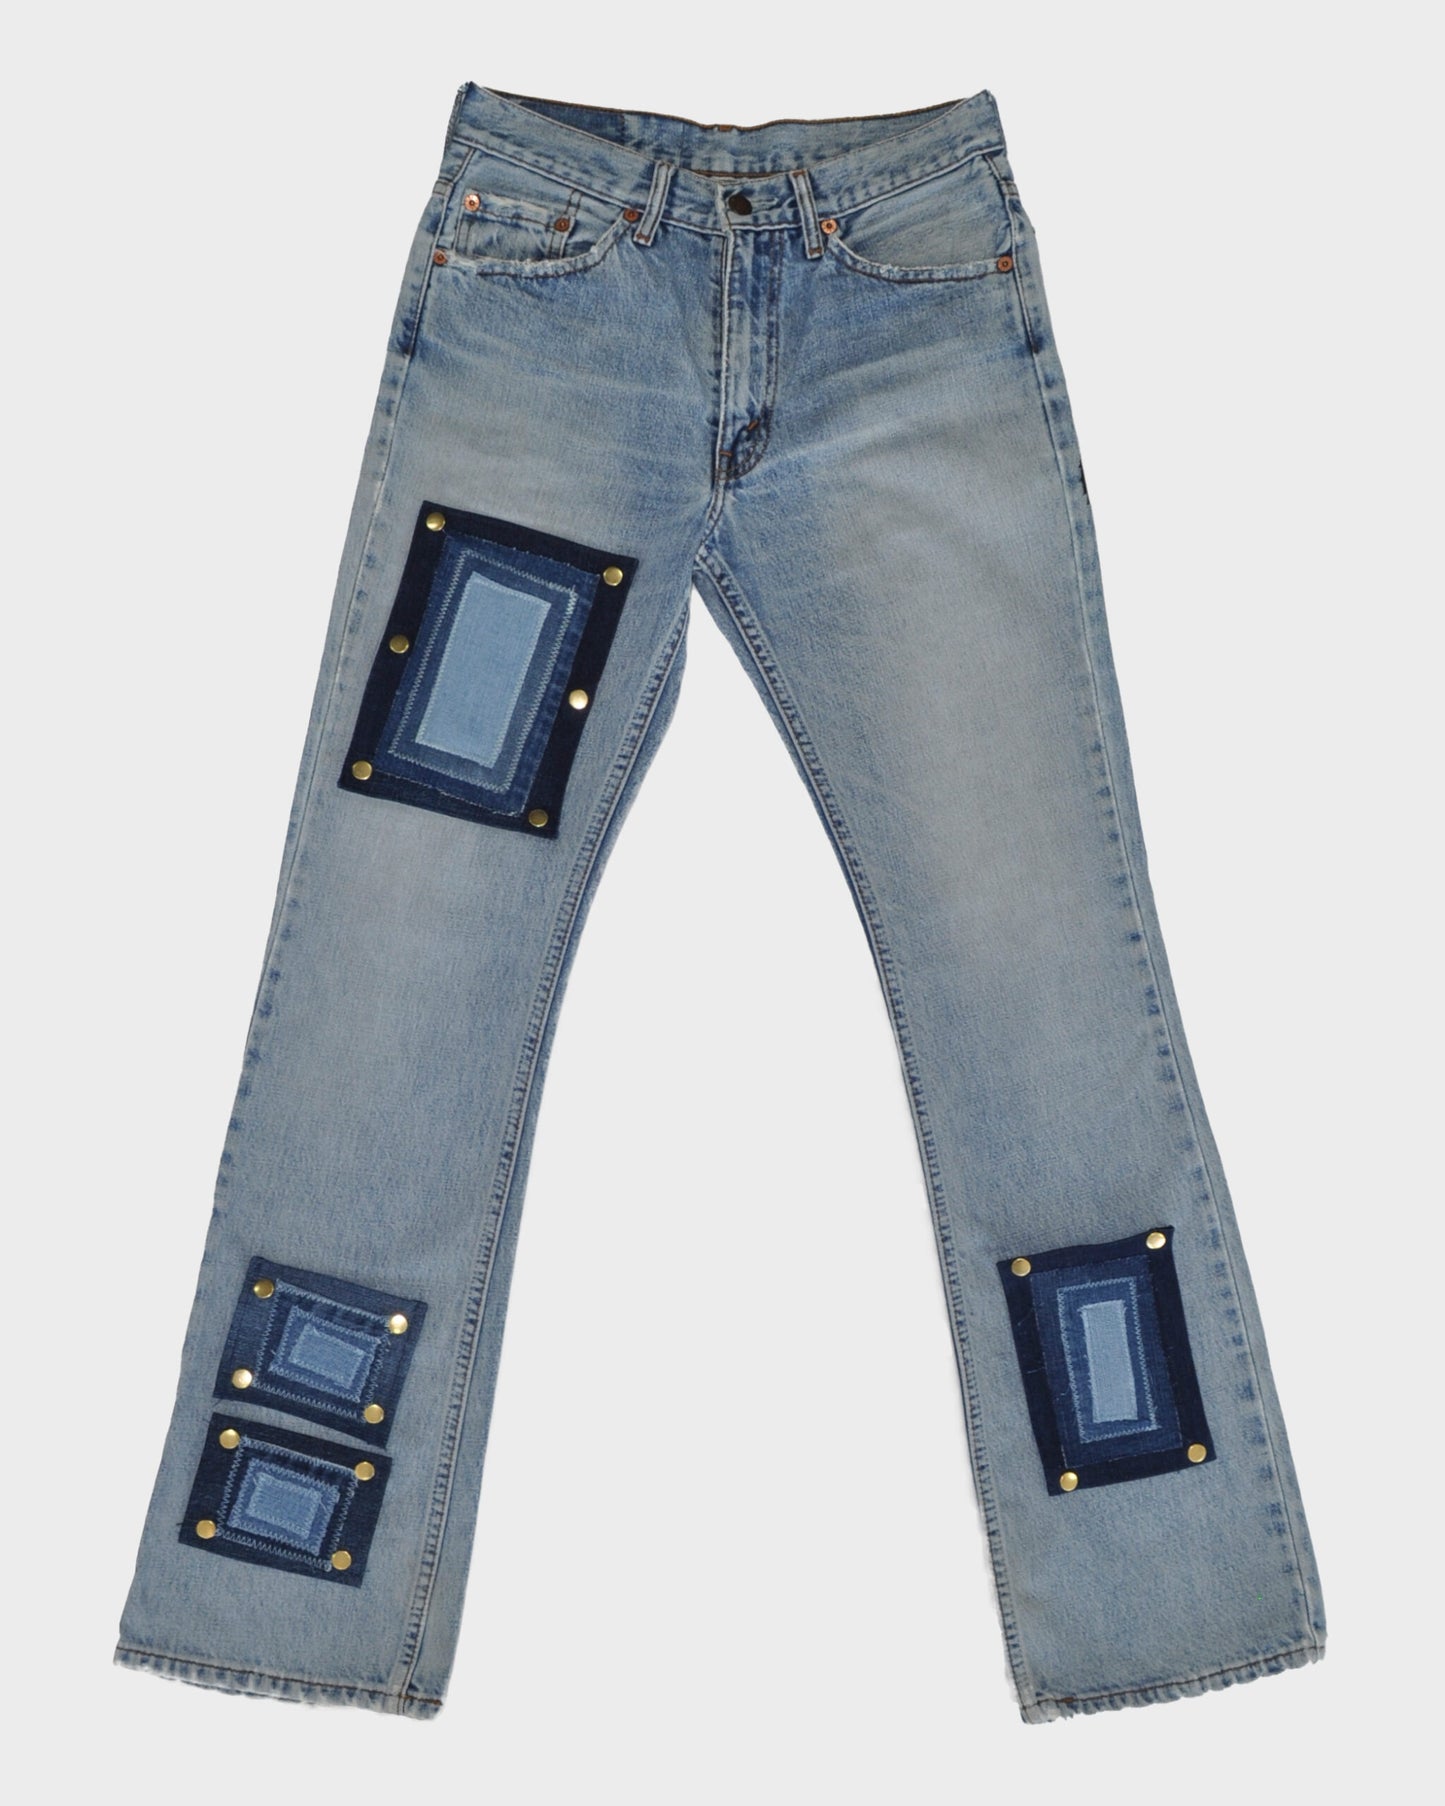 Denim Snap Jeans No. 4